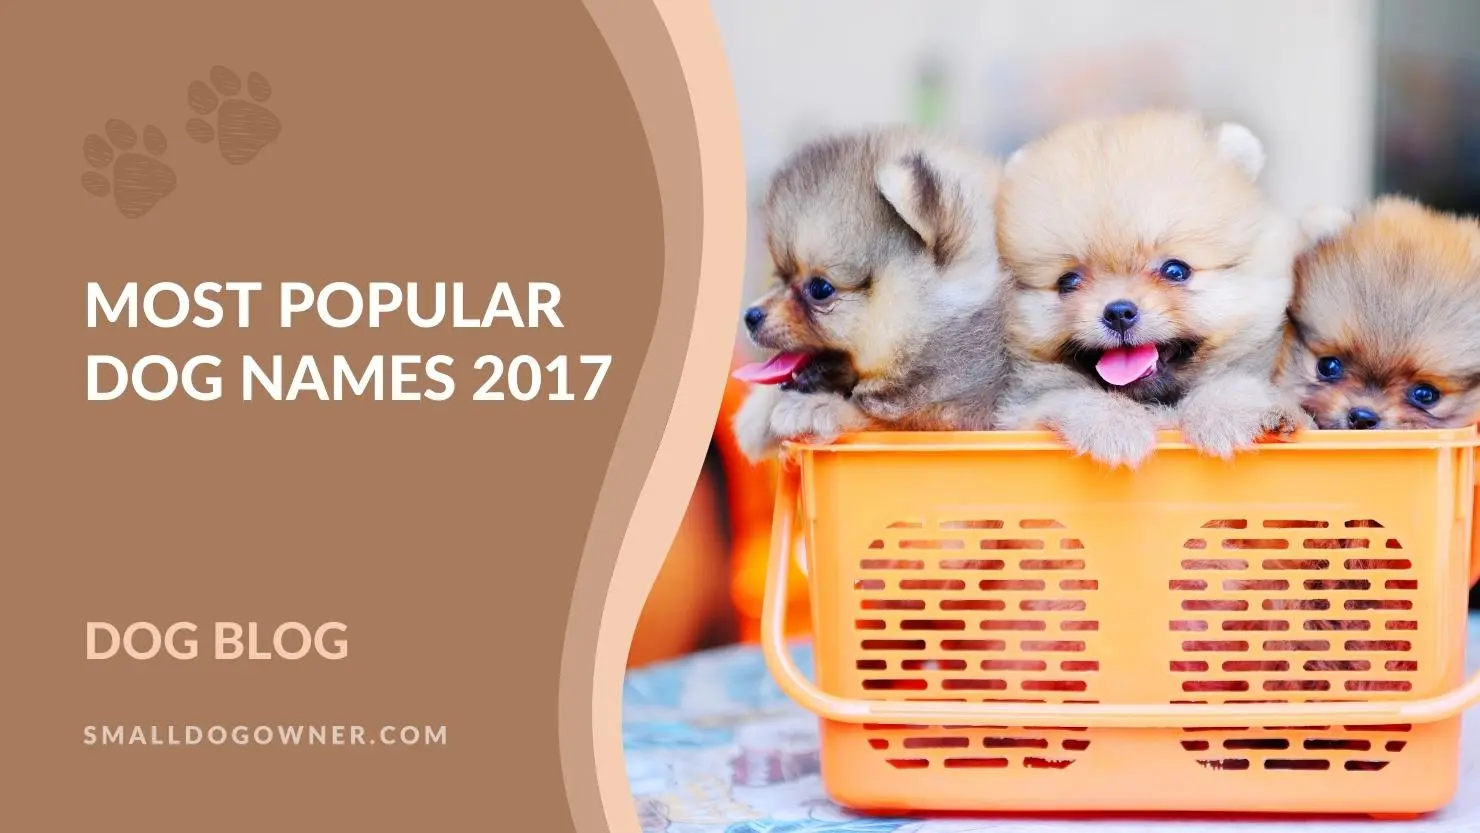 Most popular dog names 2017